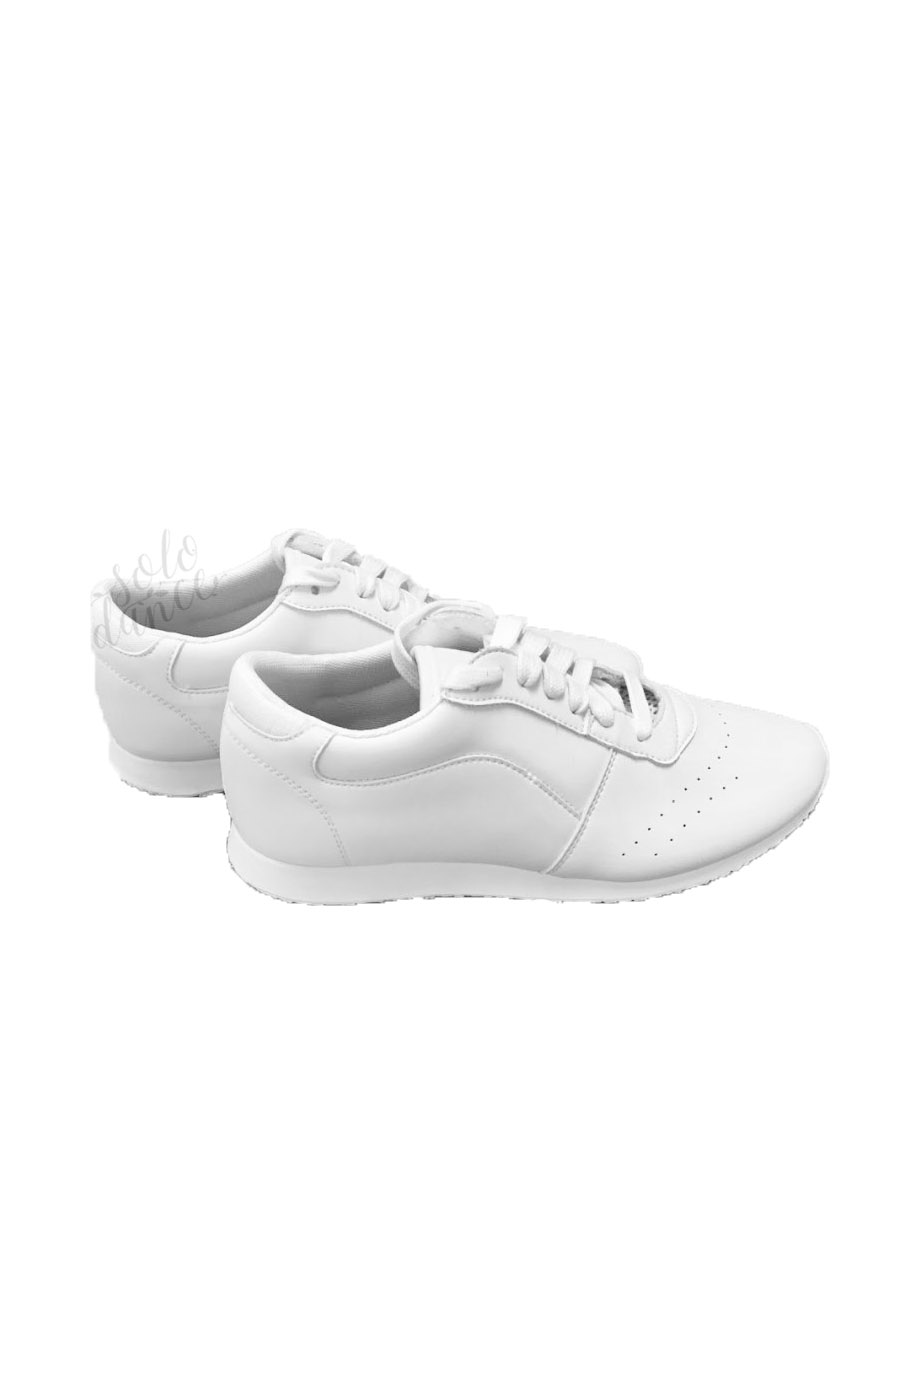 Aerobic shoes VENTURELLI  AER8 FIT white size 37